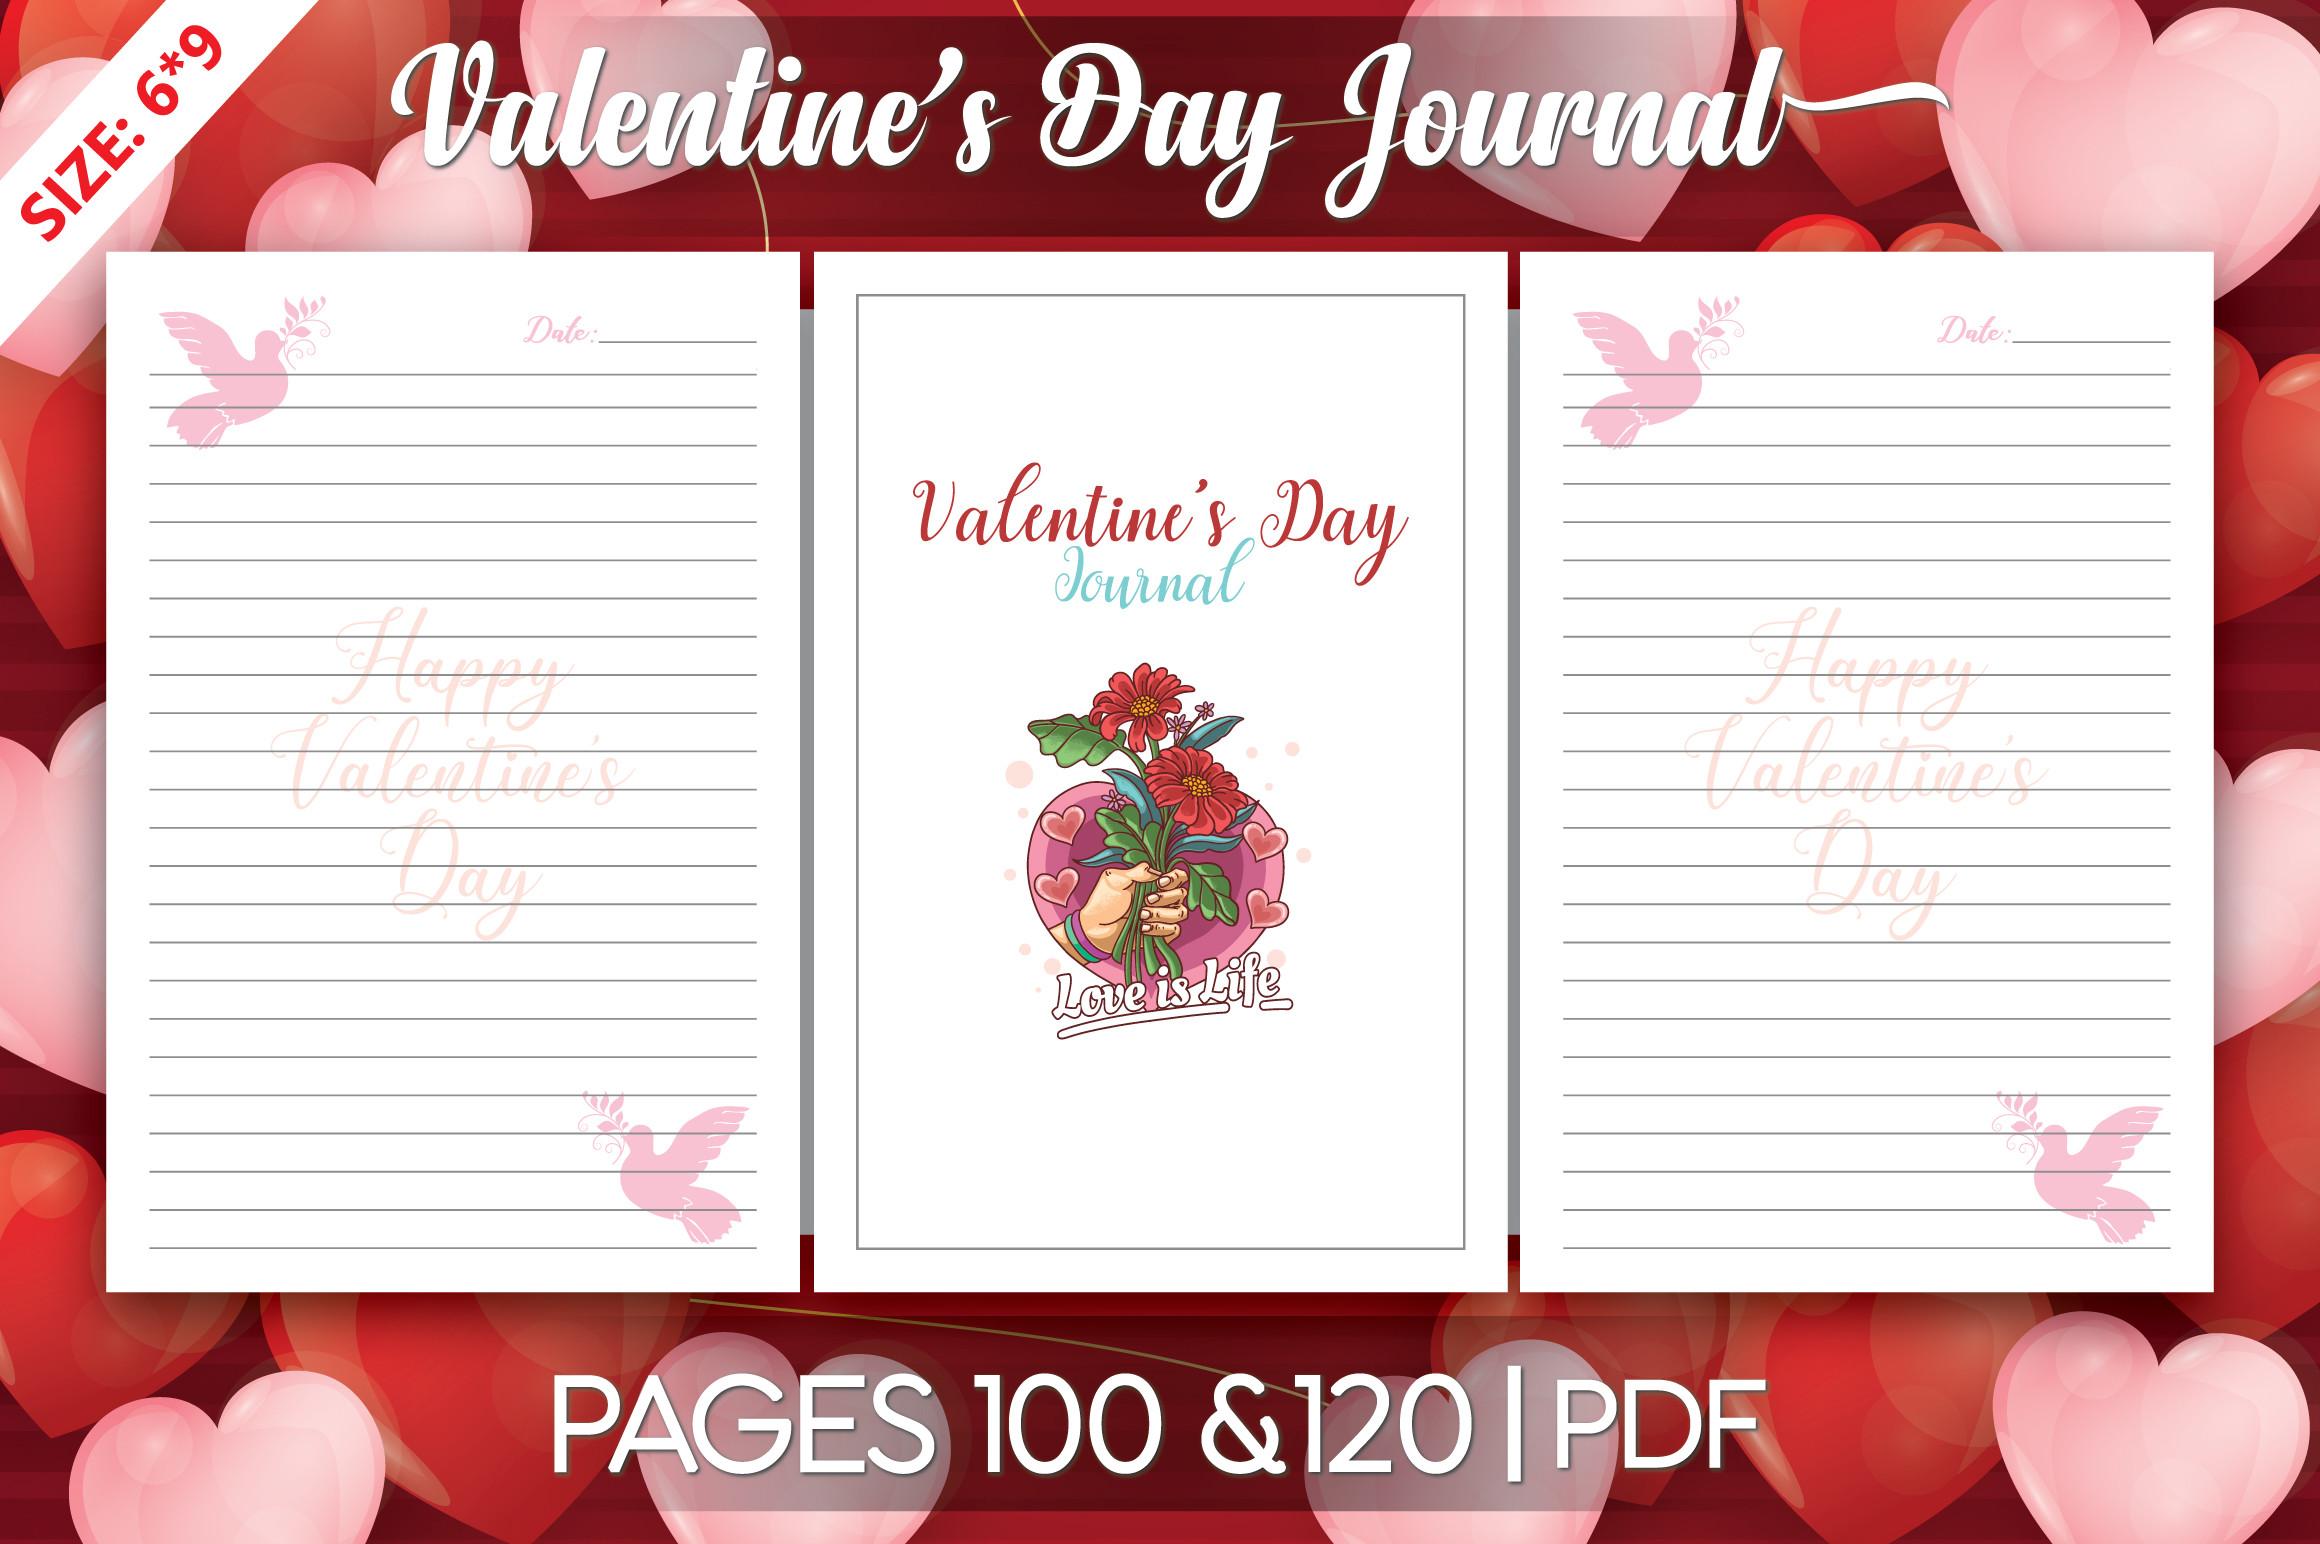 Valentine's Day Journal 2022 for KDP